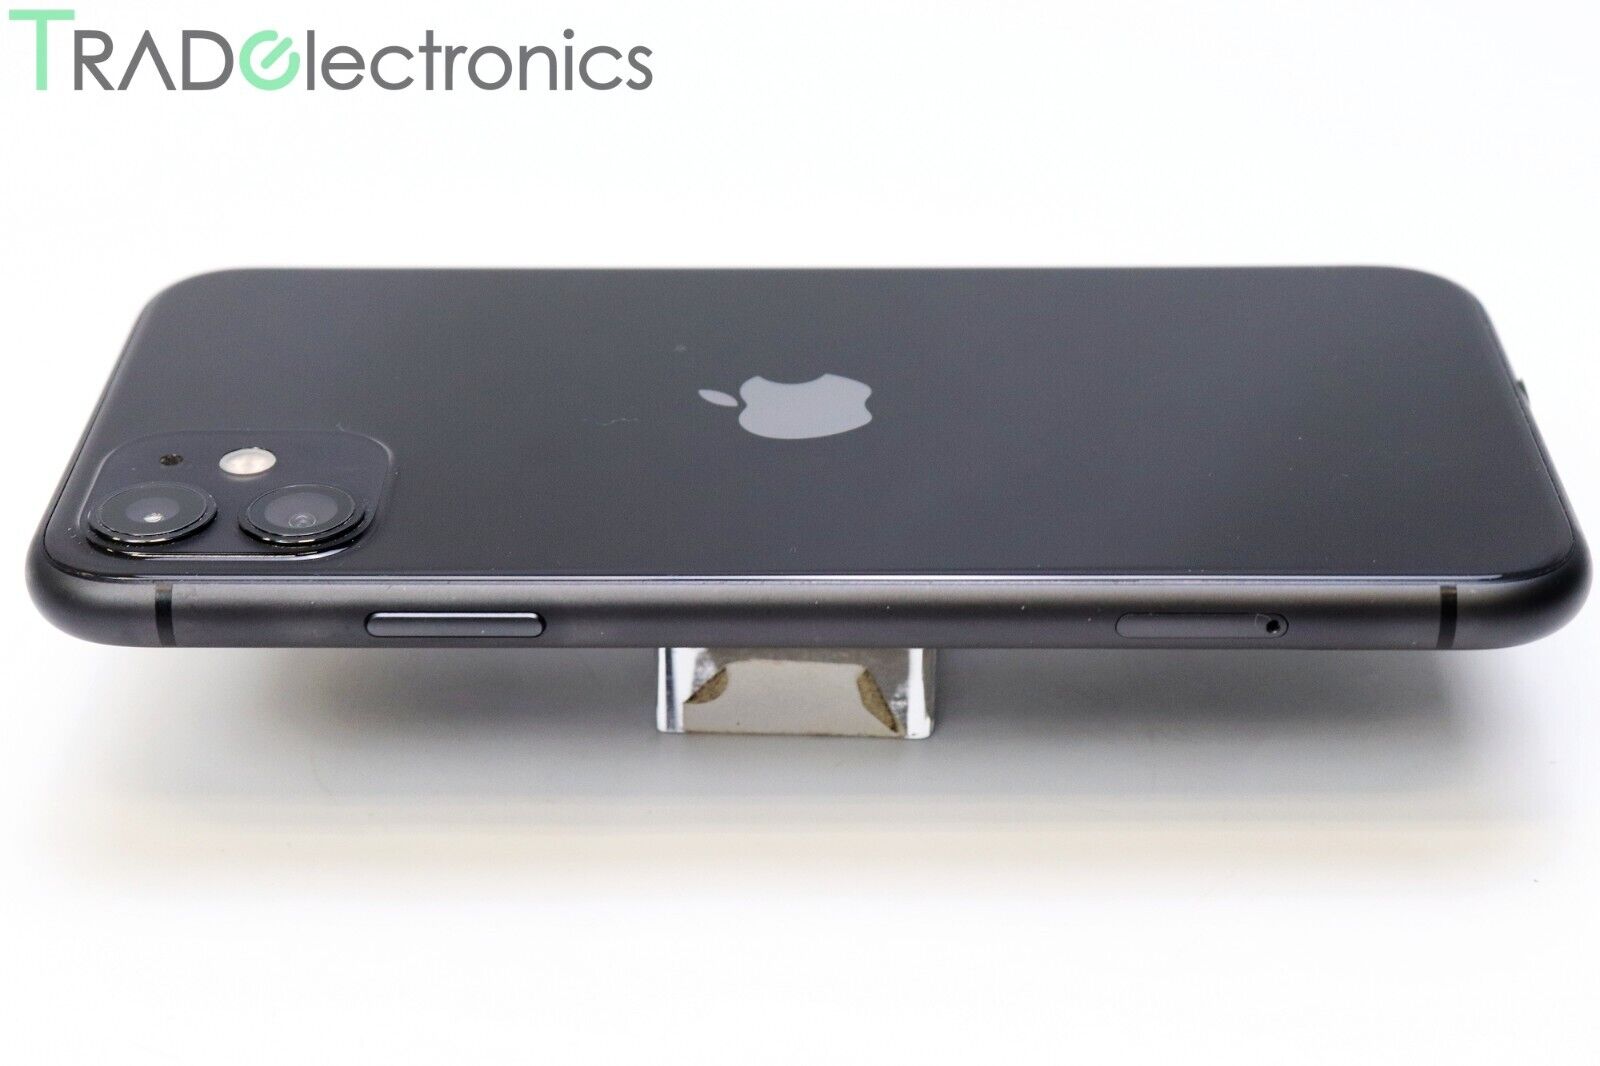 Buy APPLE iPhone 11 - 128 GB, Black